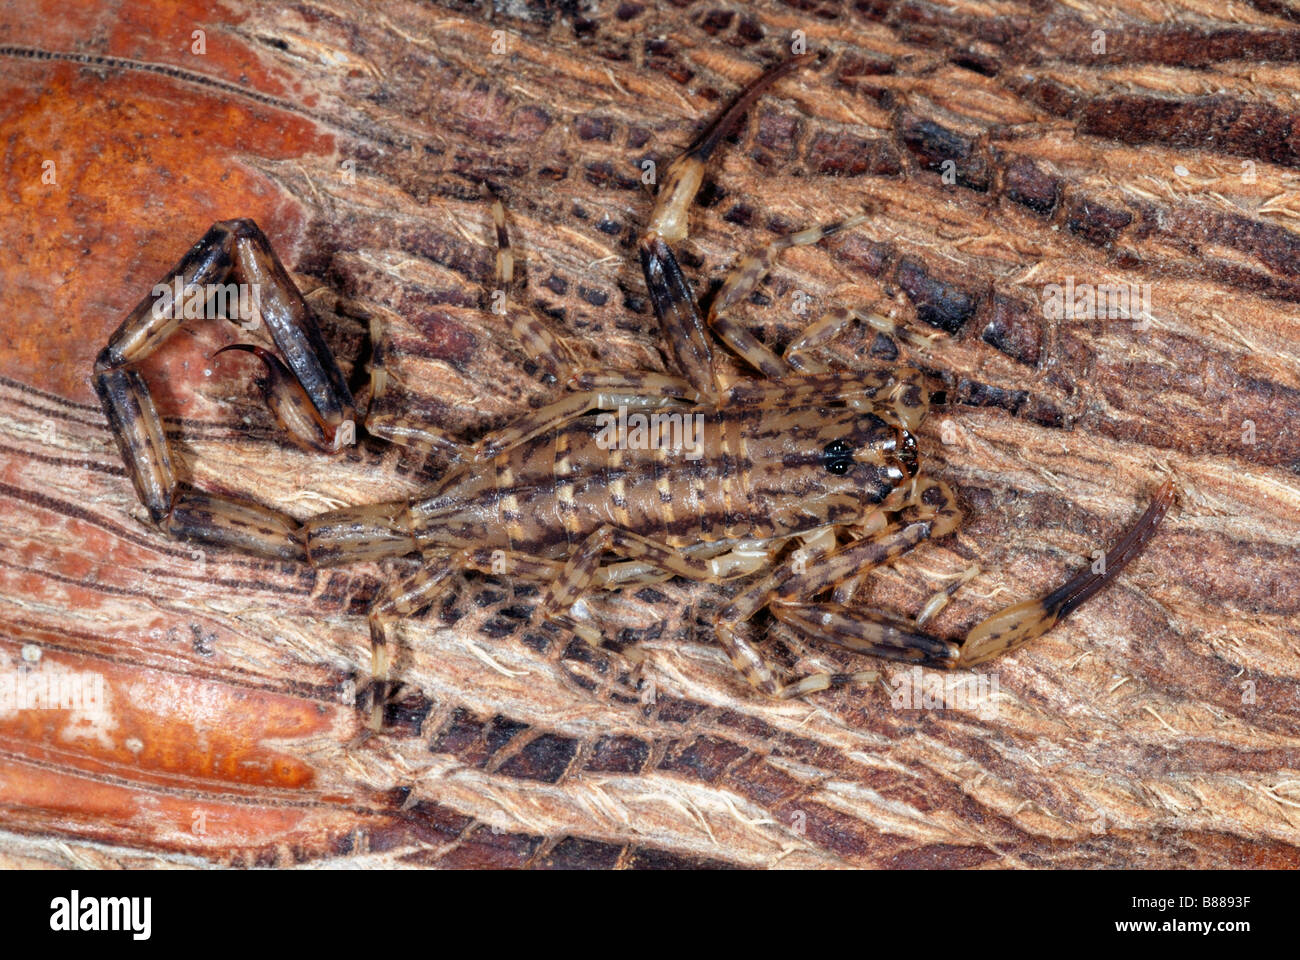 Isometrus sp. Family BUTHIDAE Bark scorpions. Stock Photo